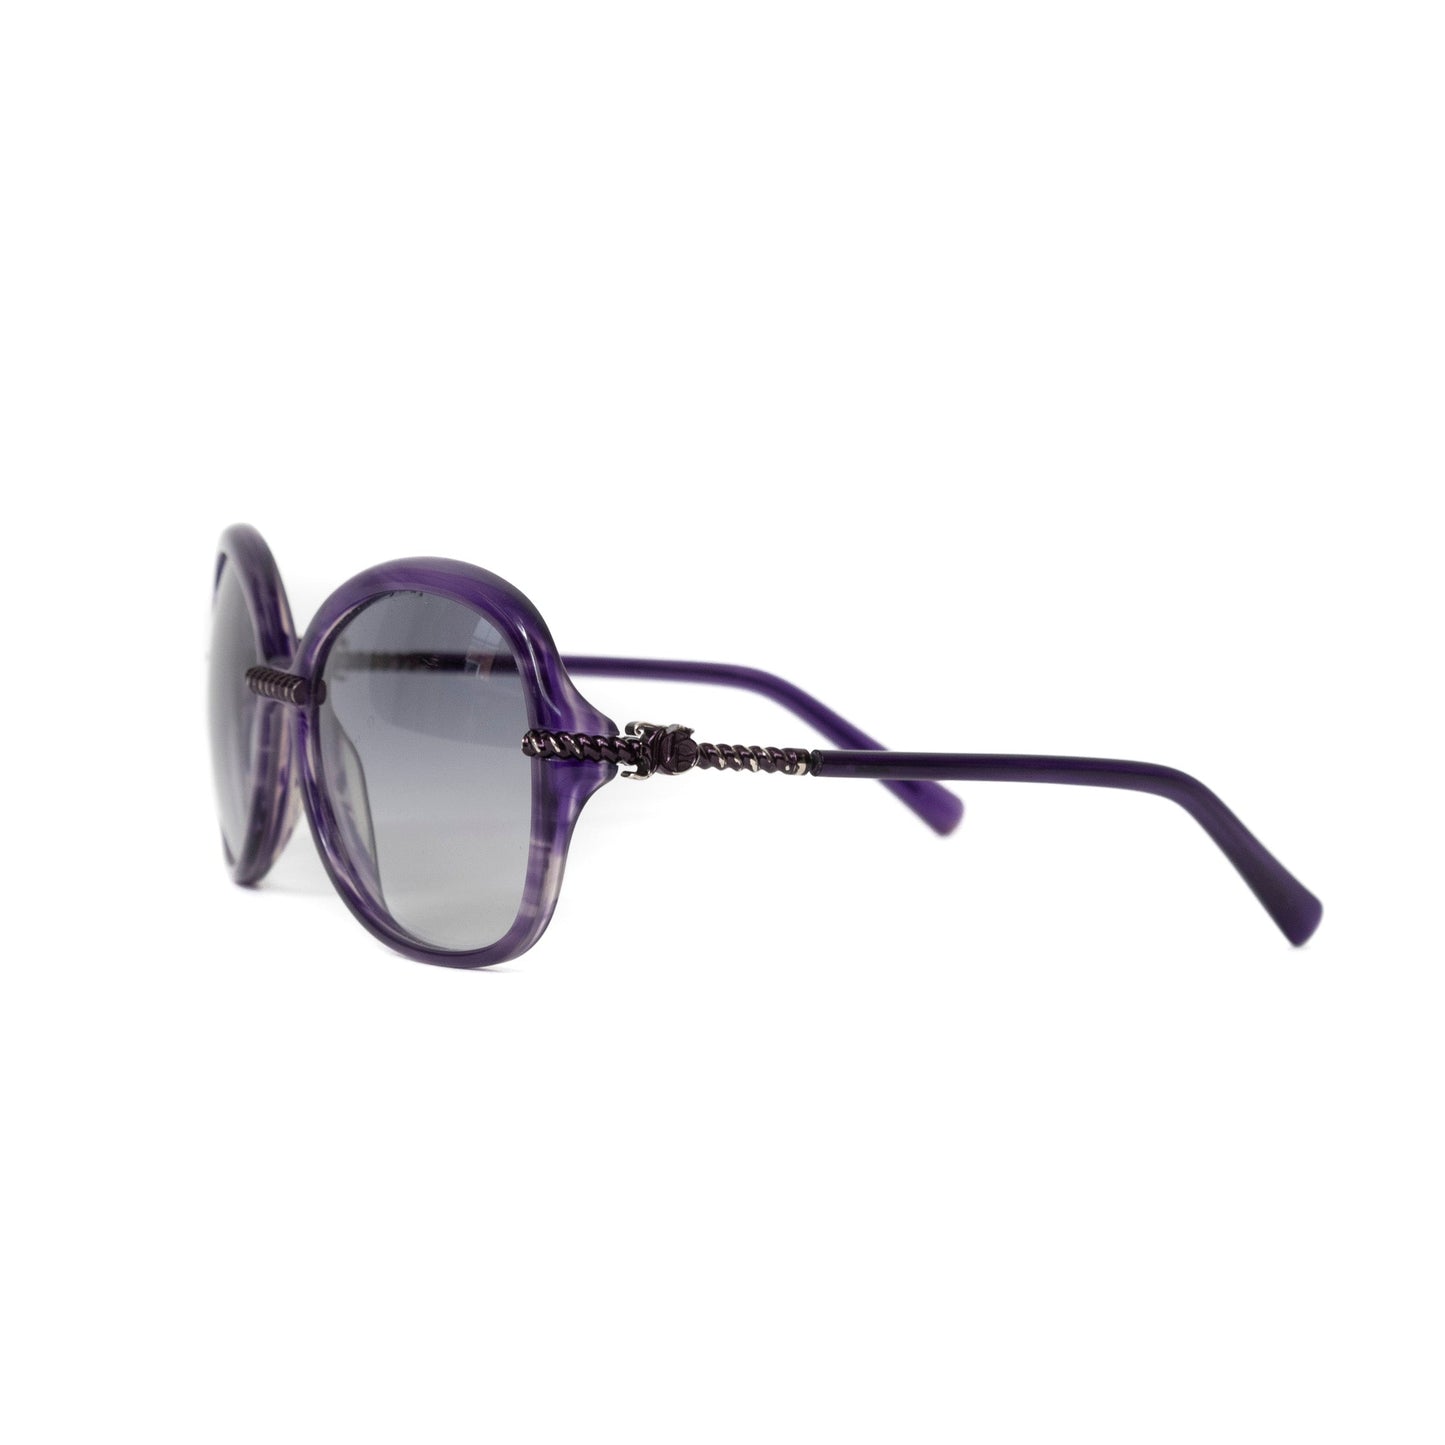 Juicy Couture Purple Sunglasses